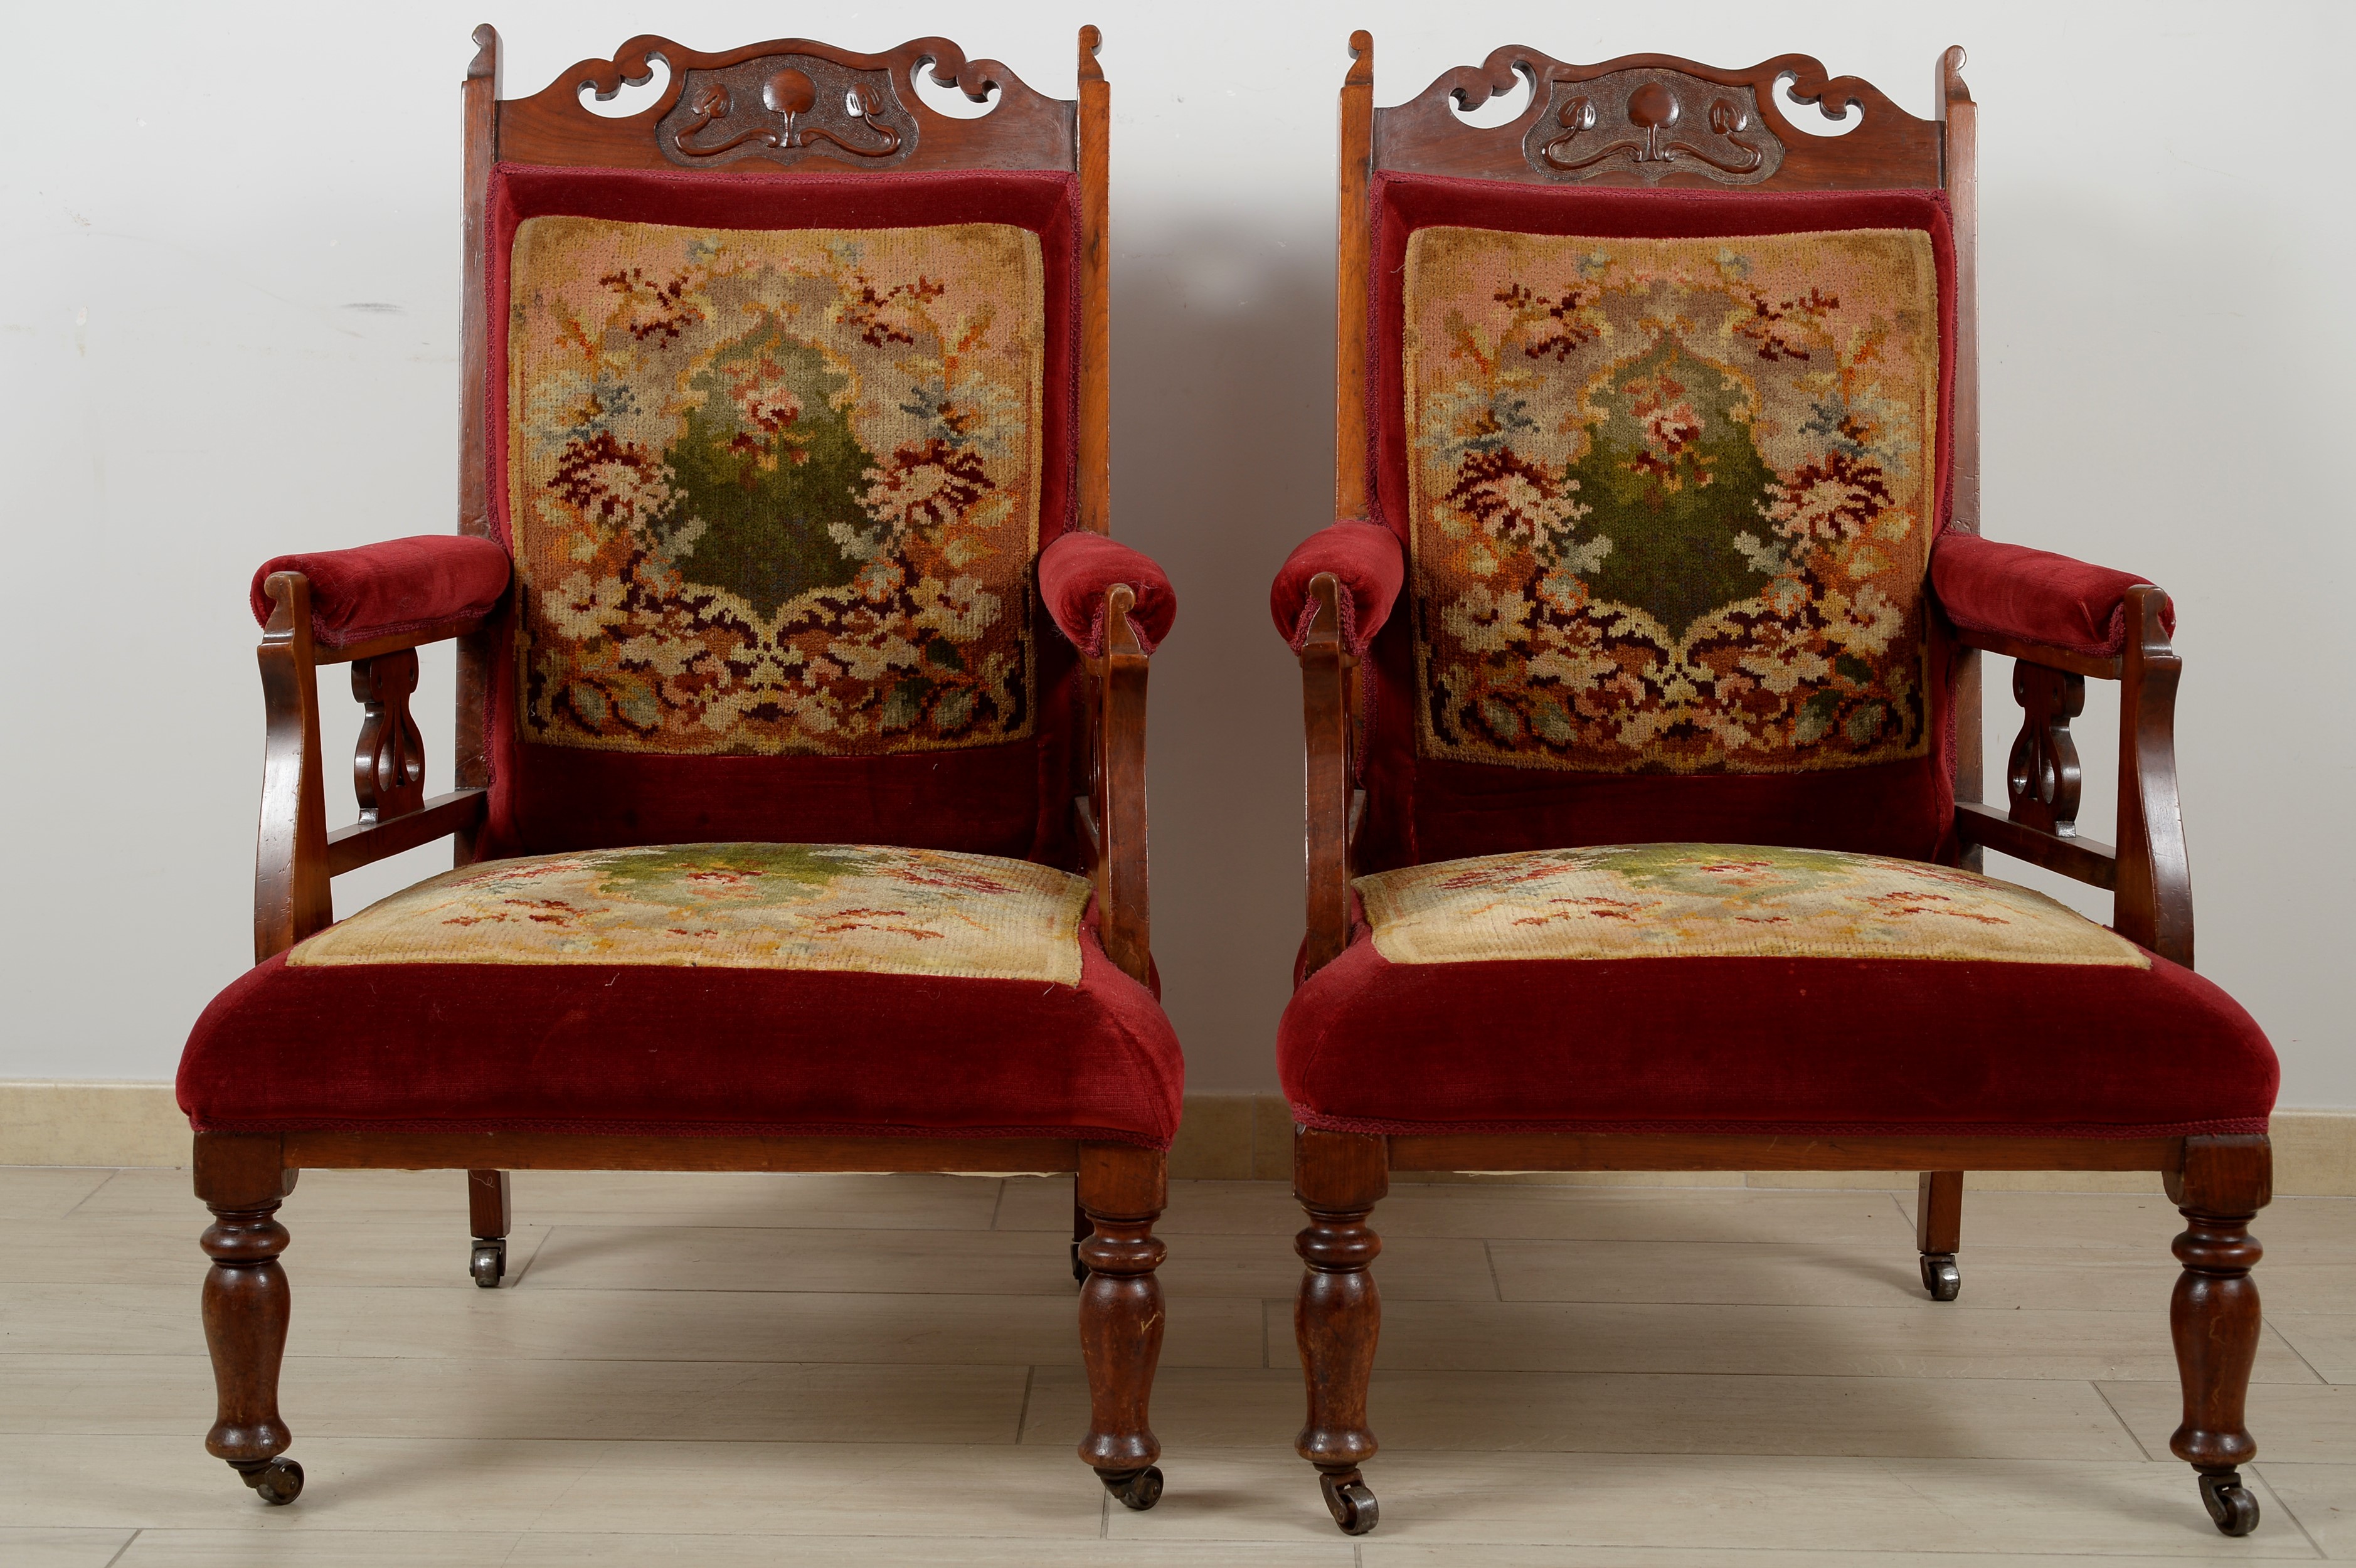 Pair of mahogany armchairs